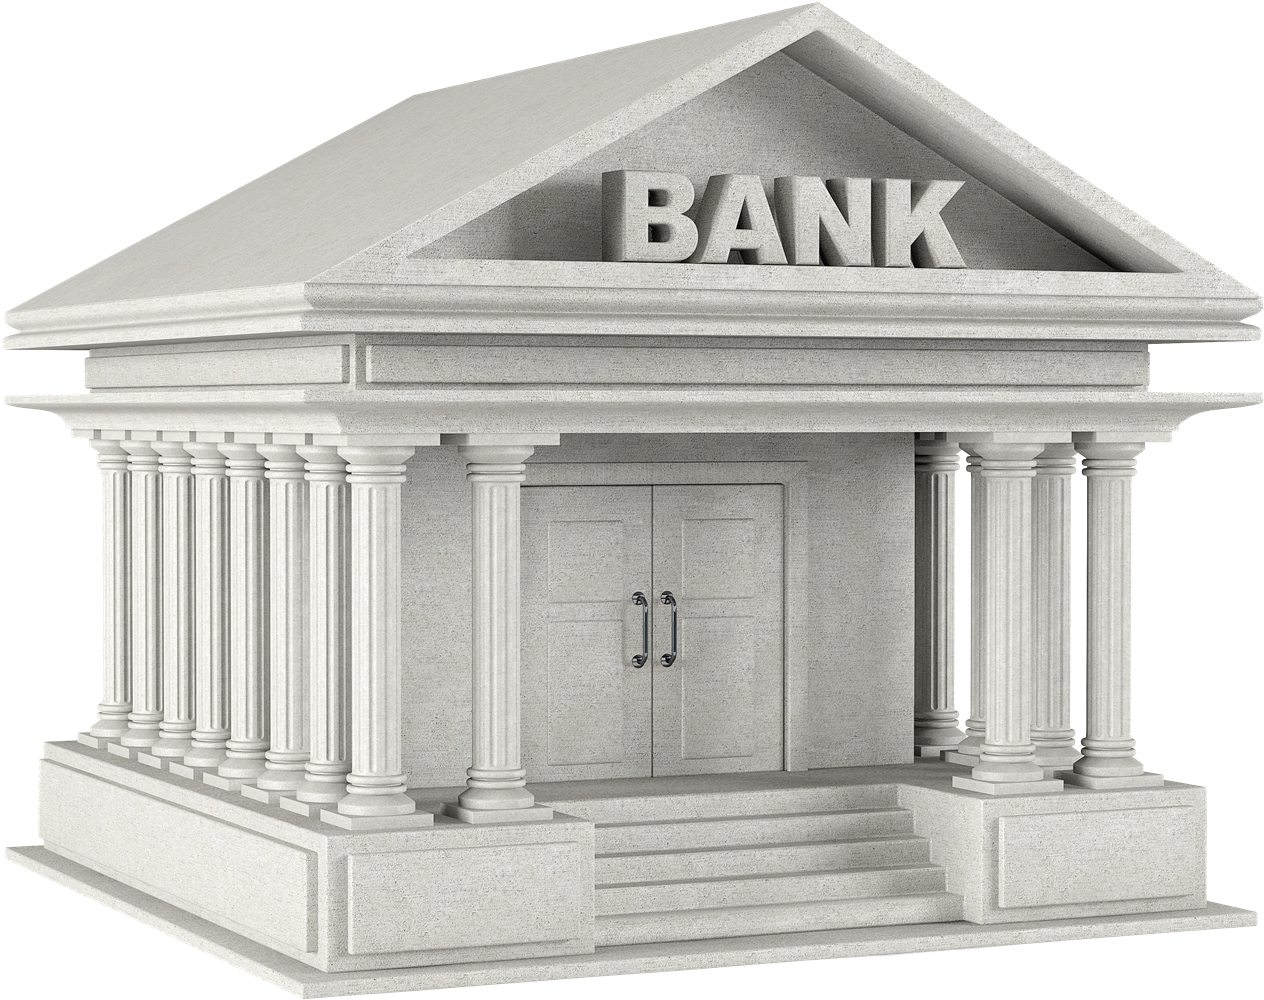 Bank Png Transparent Image - Bank Building 3d Clipart (1280x854), Png Download